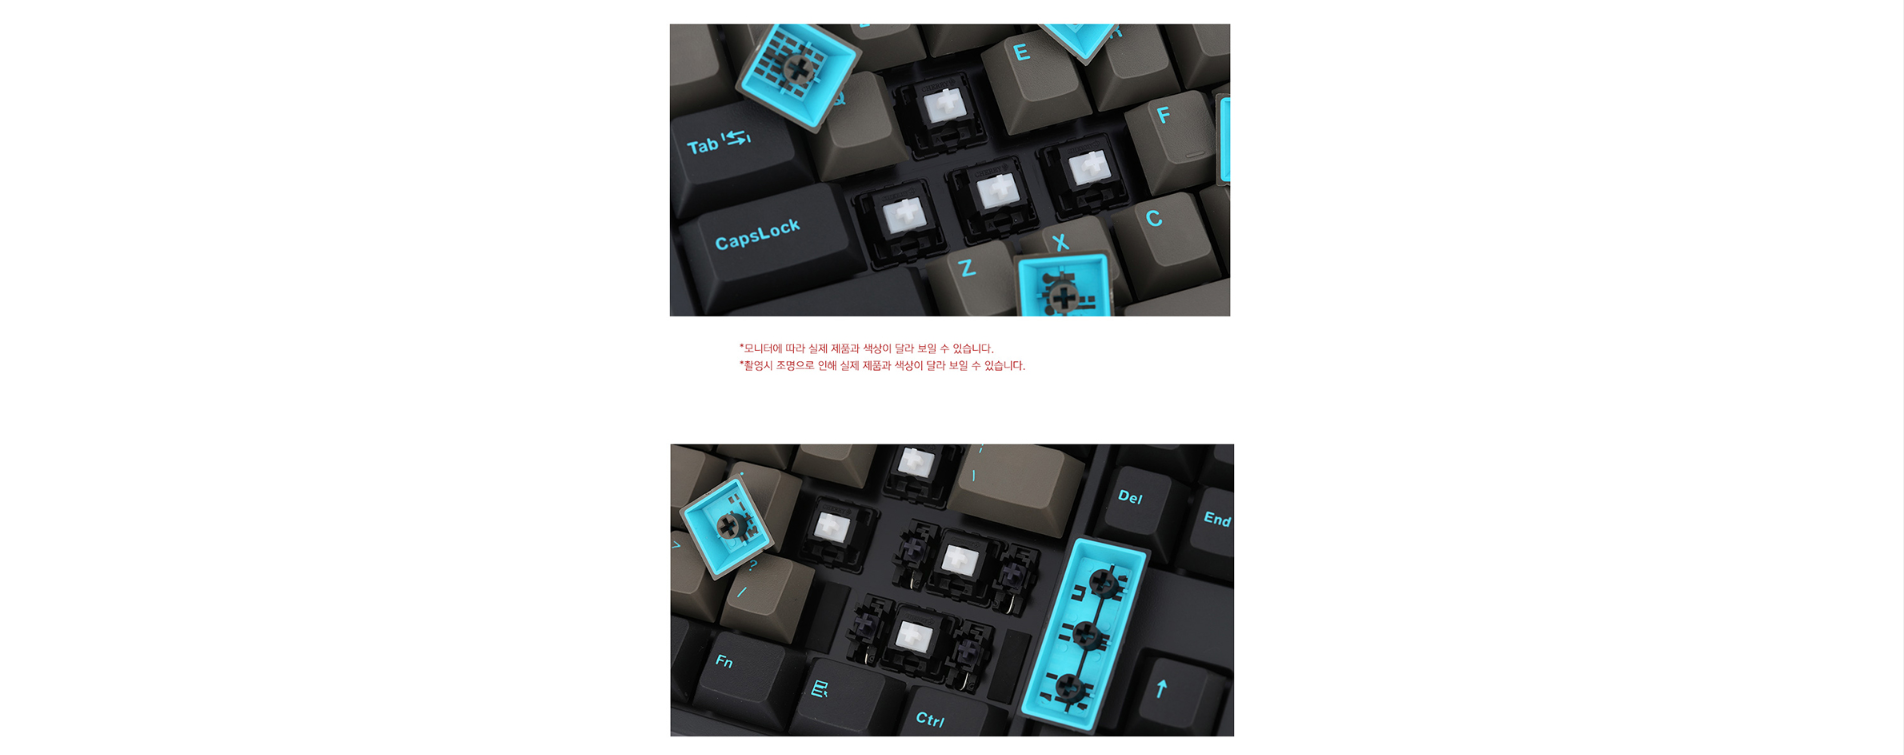 Keyboard Leopold FC750R PD Graphite Blue Font Cherry Blue switch có chất lượng keycap và switch cao